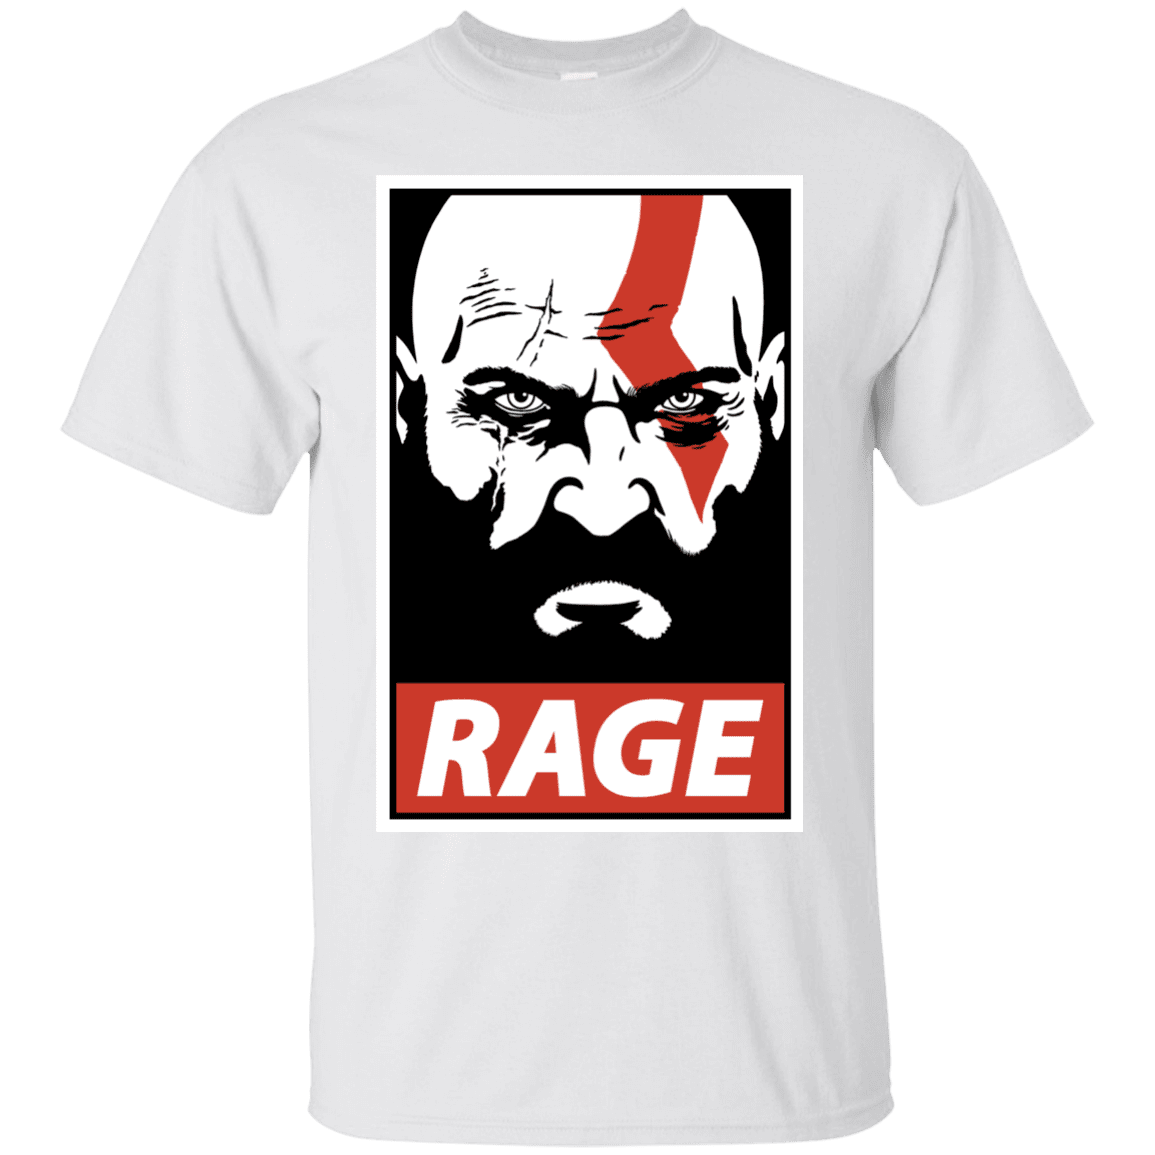 T-Shirts White / S Spartan Rage T-Shirt